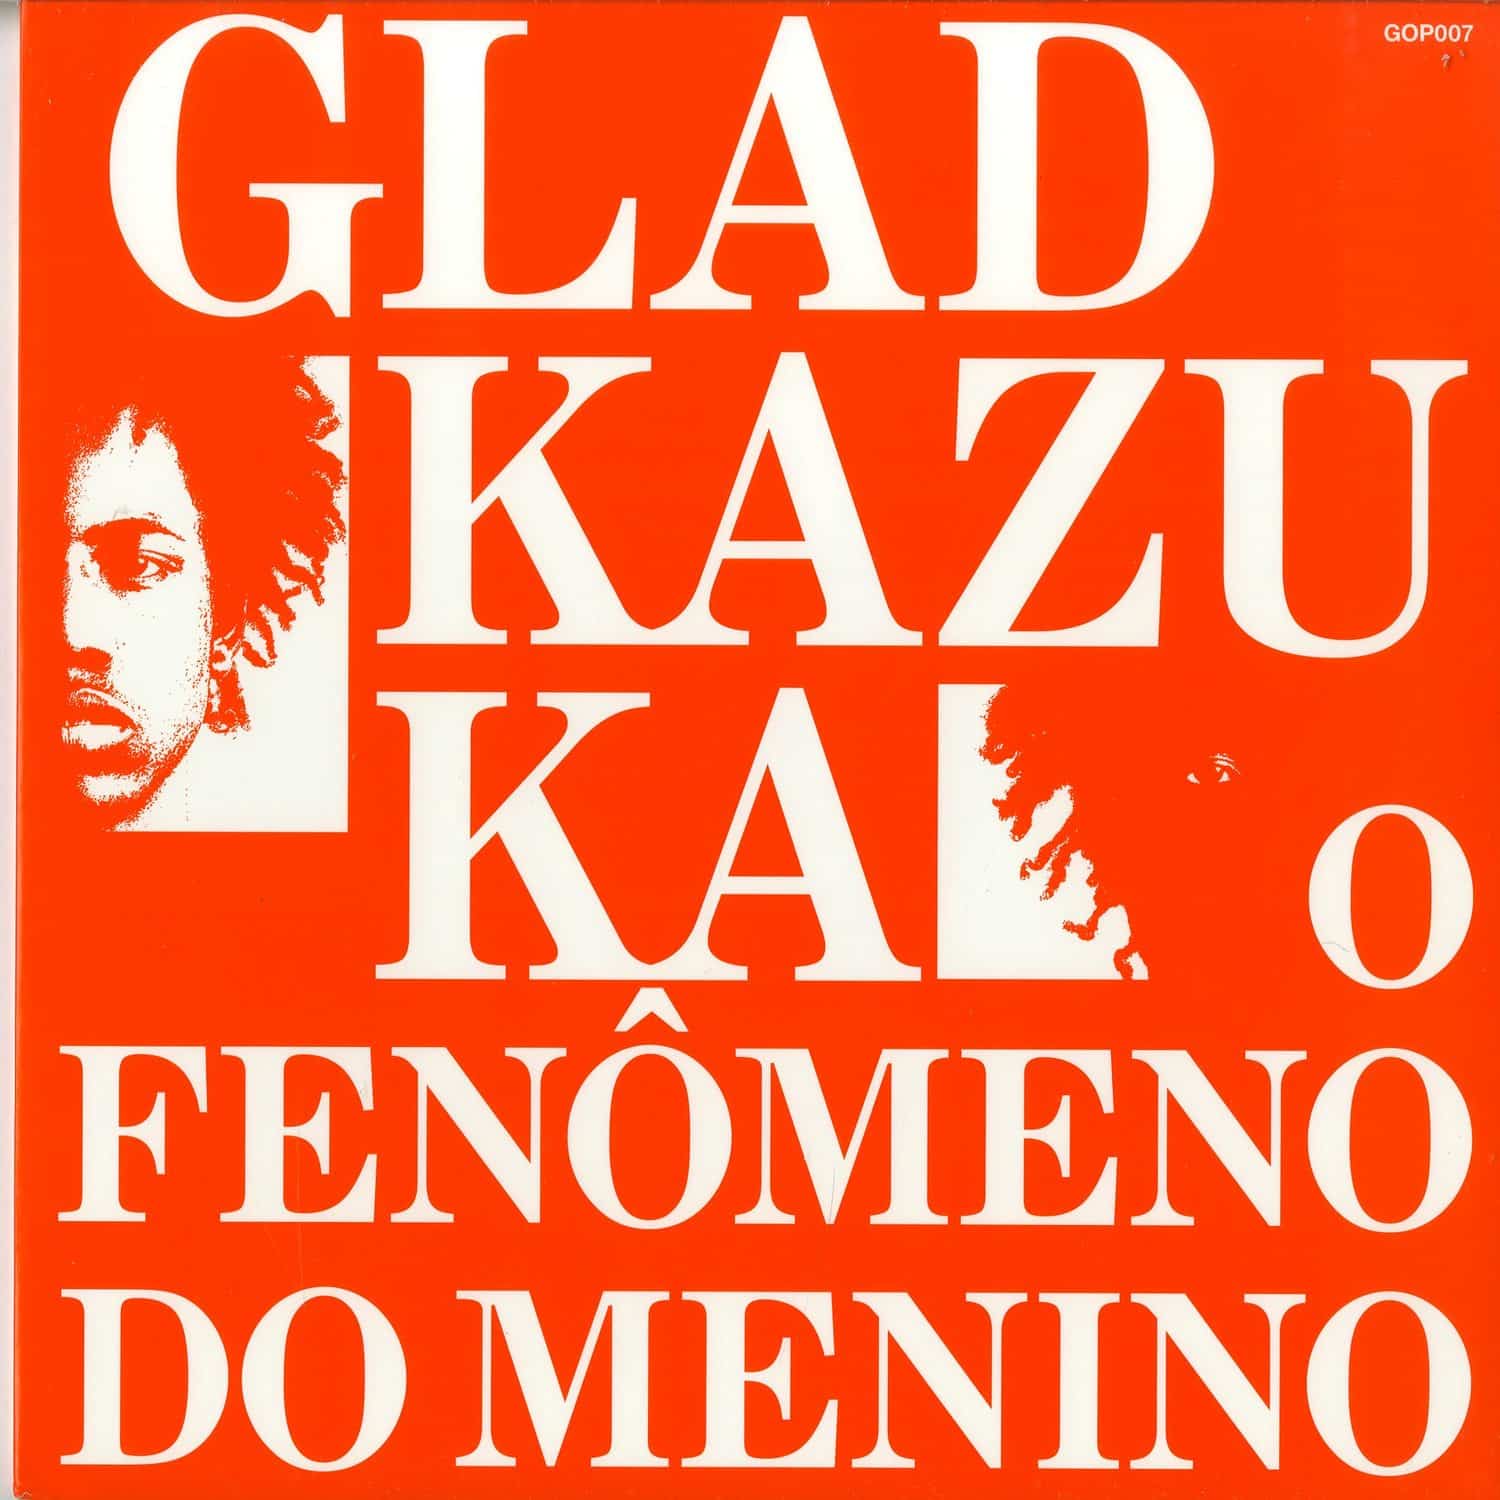 Gladkazuka - O FENOMENO DO MENINO EP